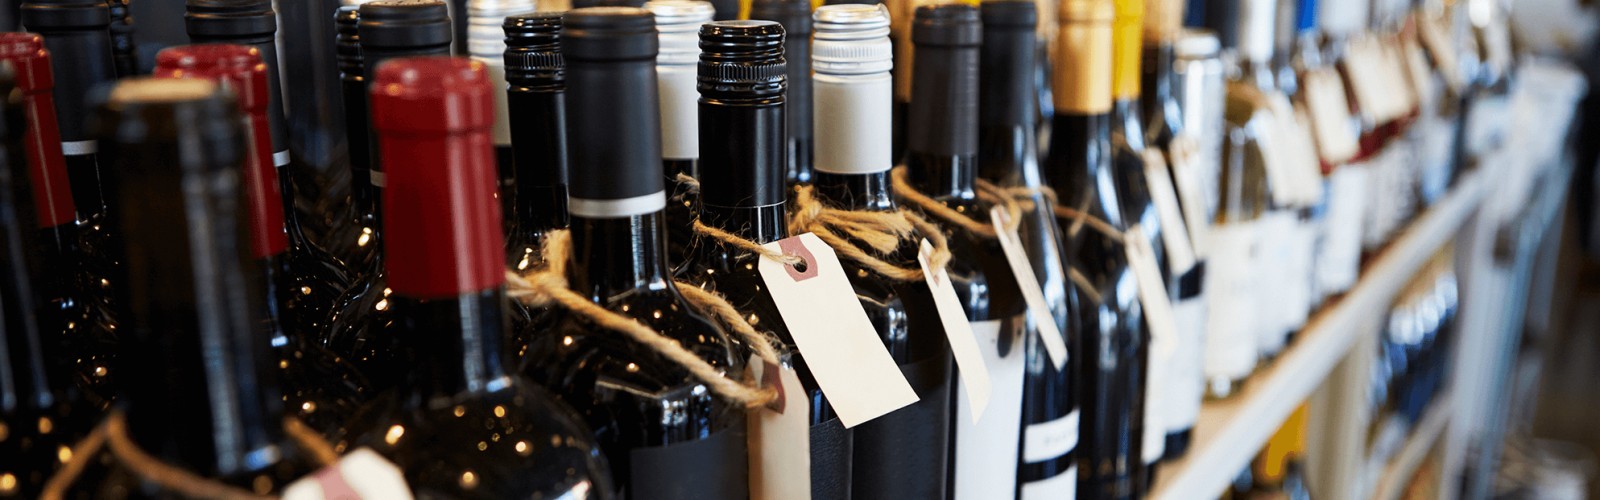 Wine and Liquor Pricing